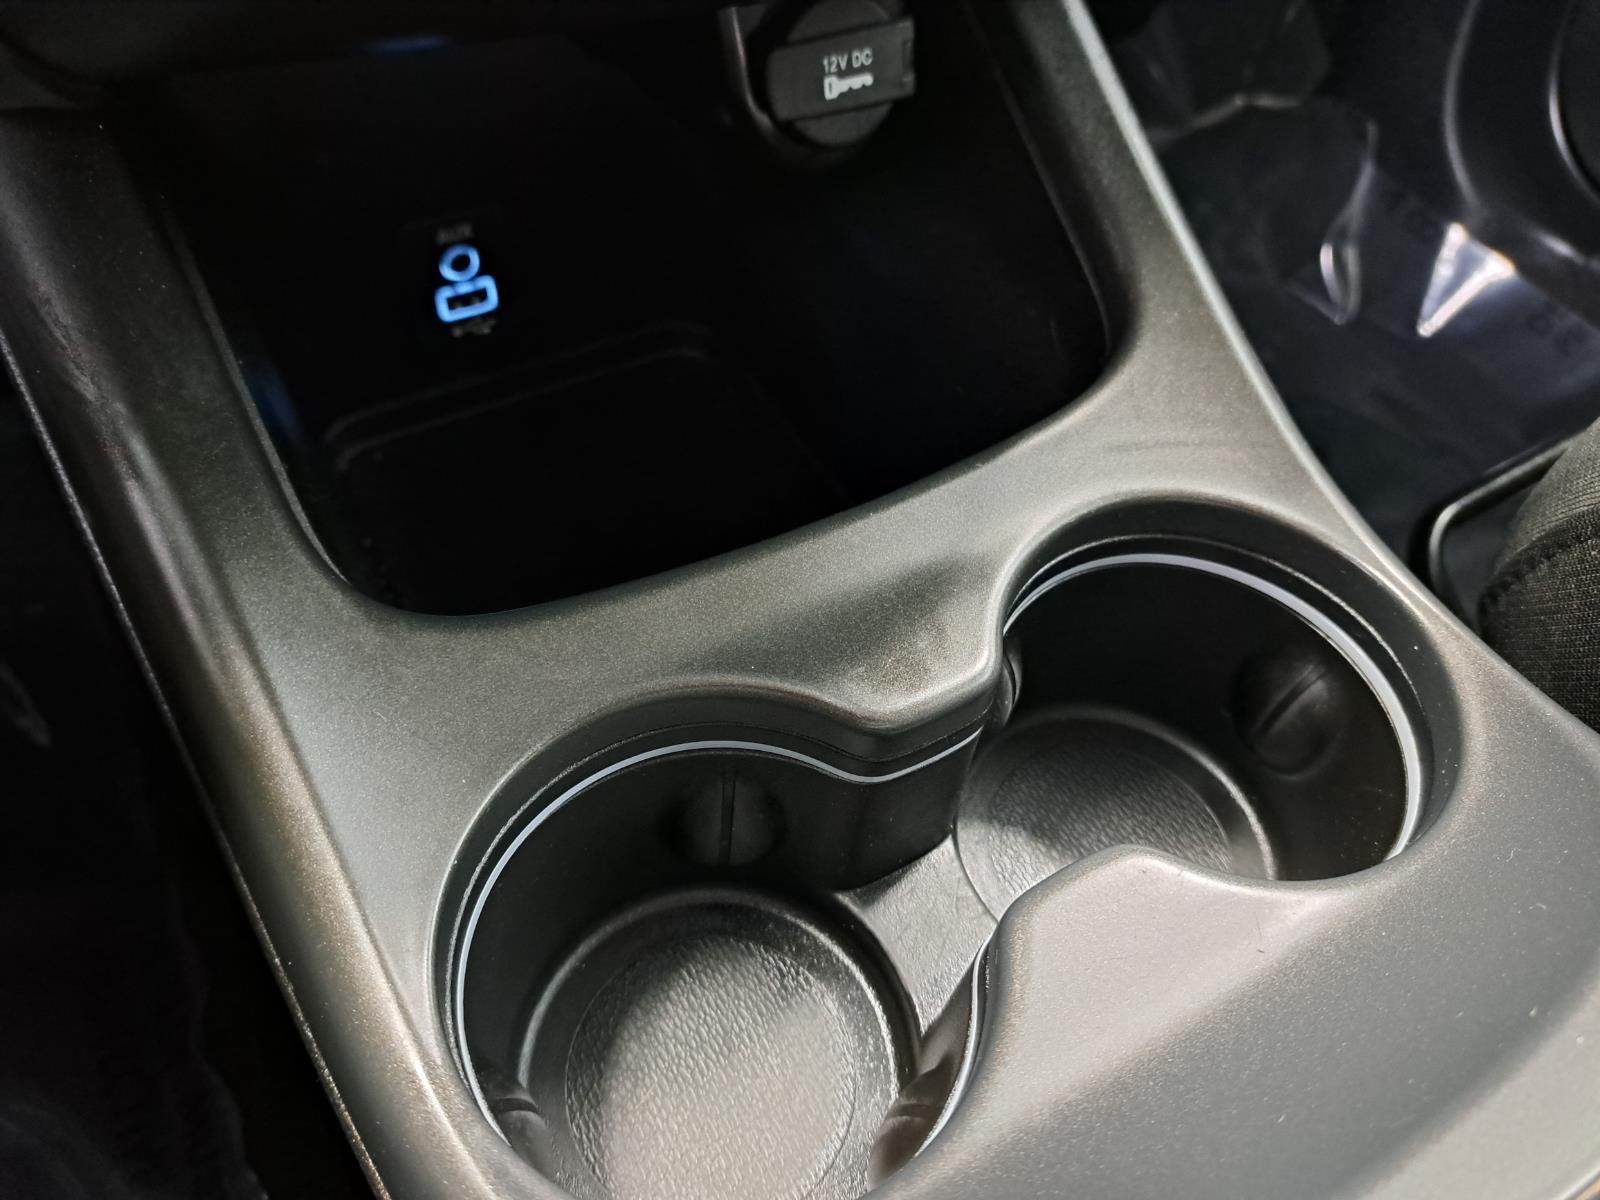 2019 Dodge Journey SE SUV Front Wheel Drive 15